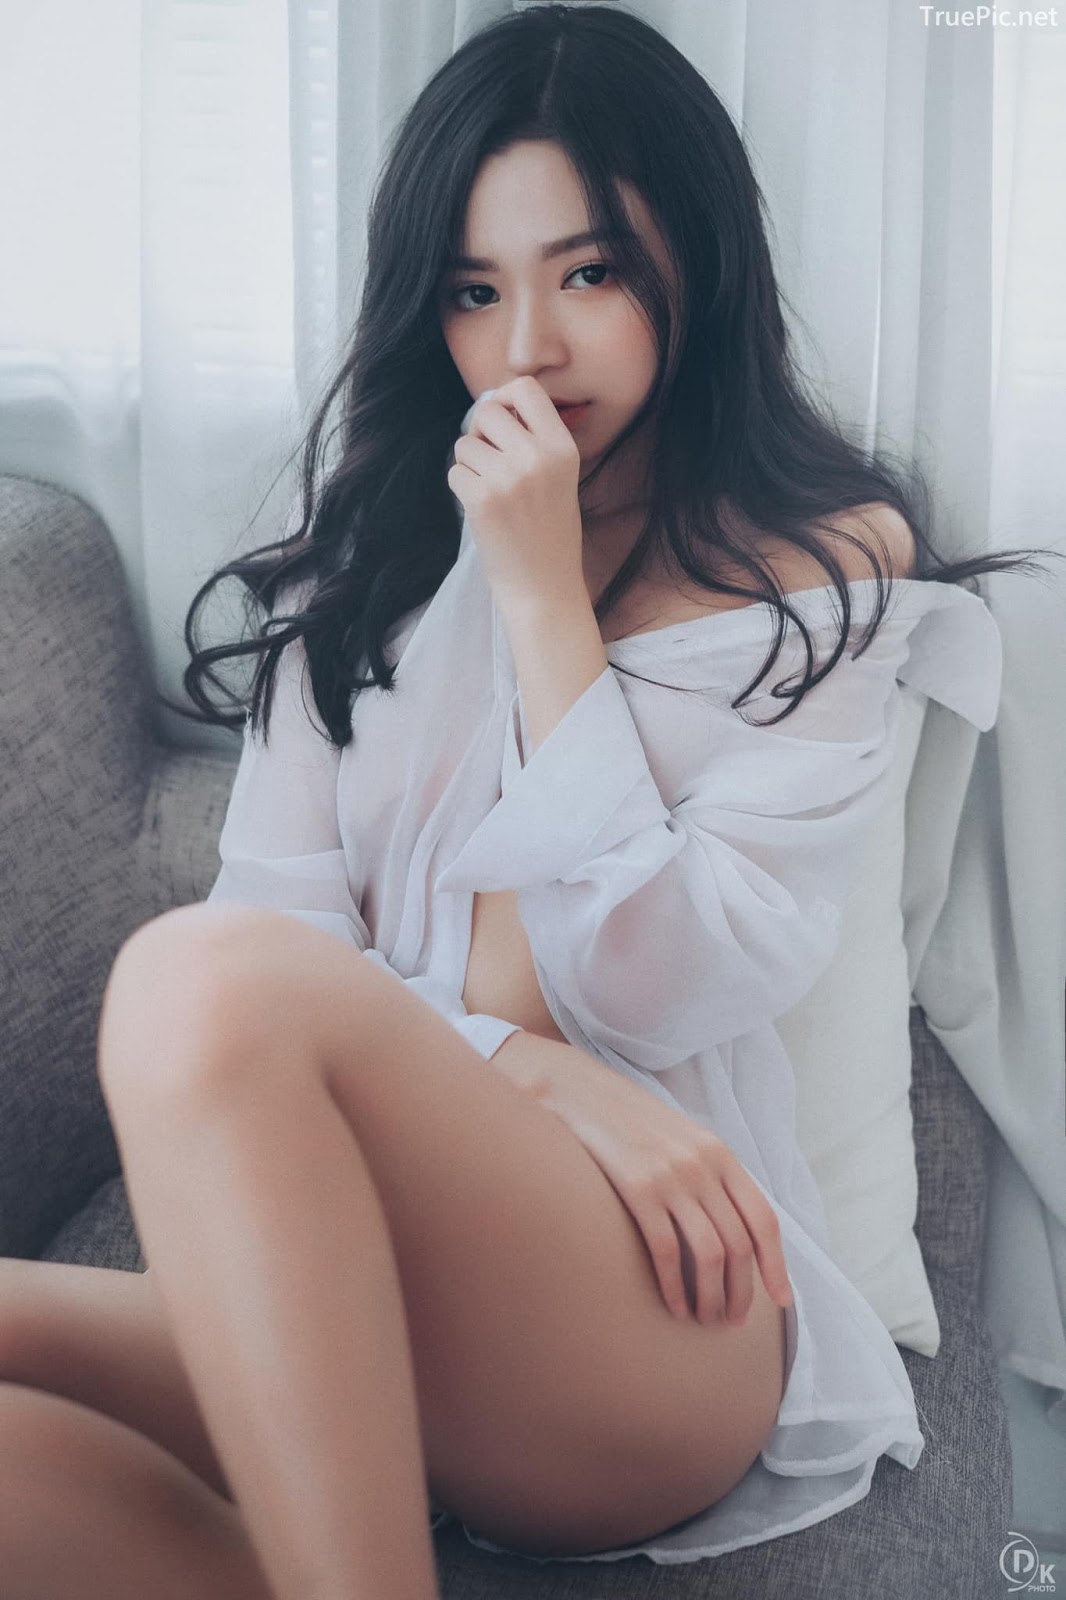 Vietnamese Sexy Model - Vu Ngoc Kim Chi - Beautiful in white - TruePic.net- Picture 13